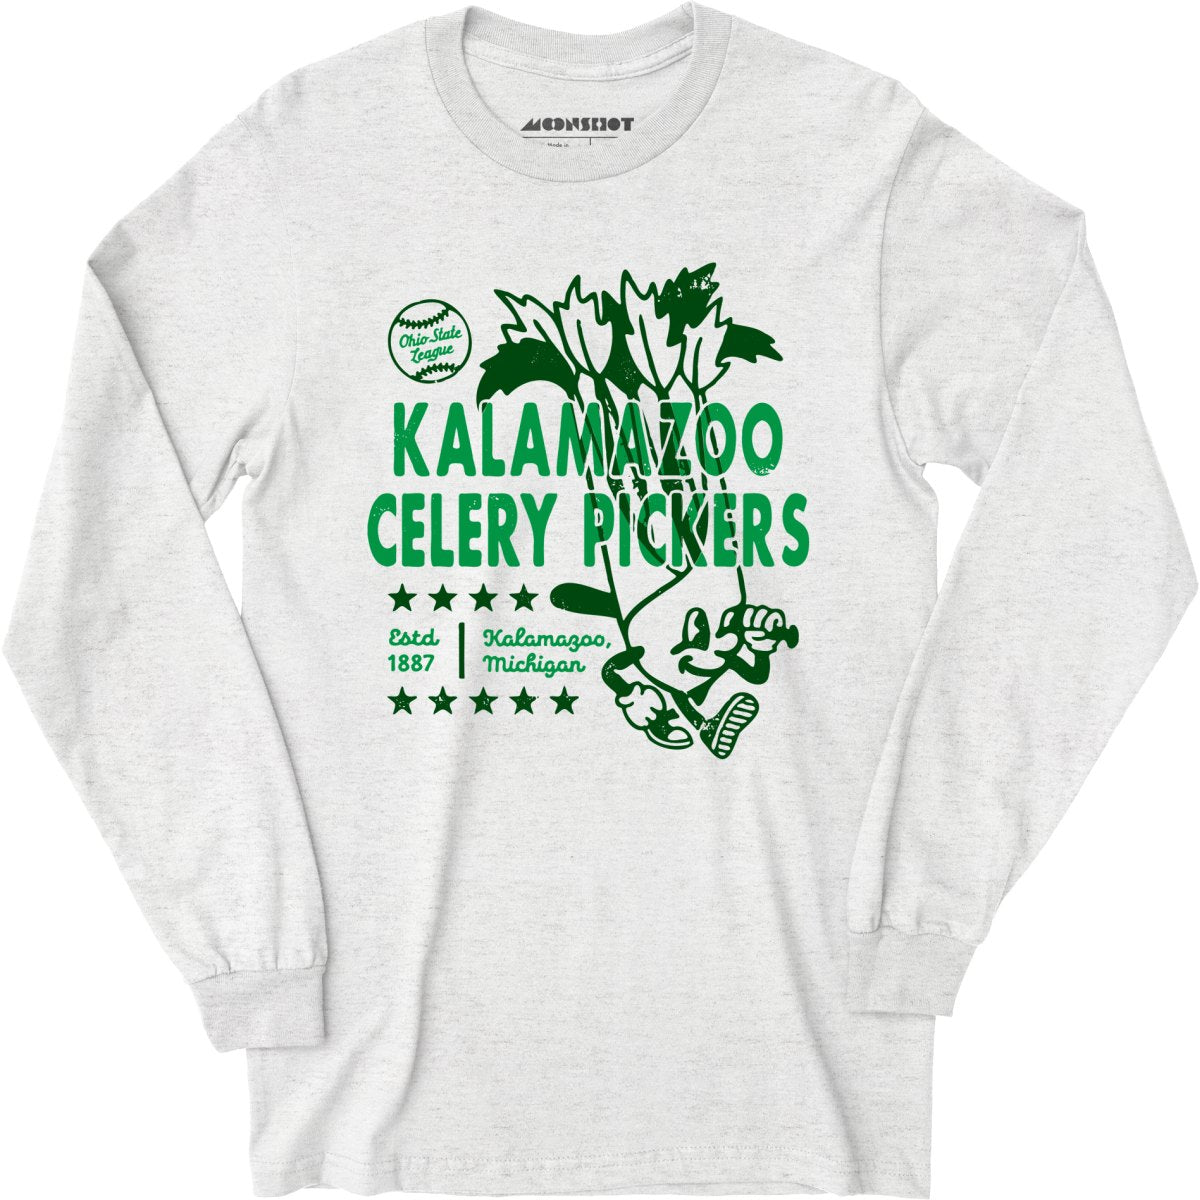 Kalamazoo Celery Pickers - Michigan - Vintage Defunct Baseball Teams - Long Sleeve T-Shirt